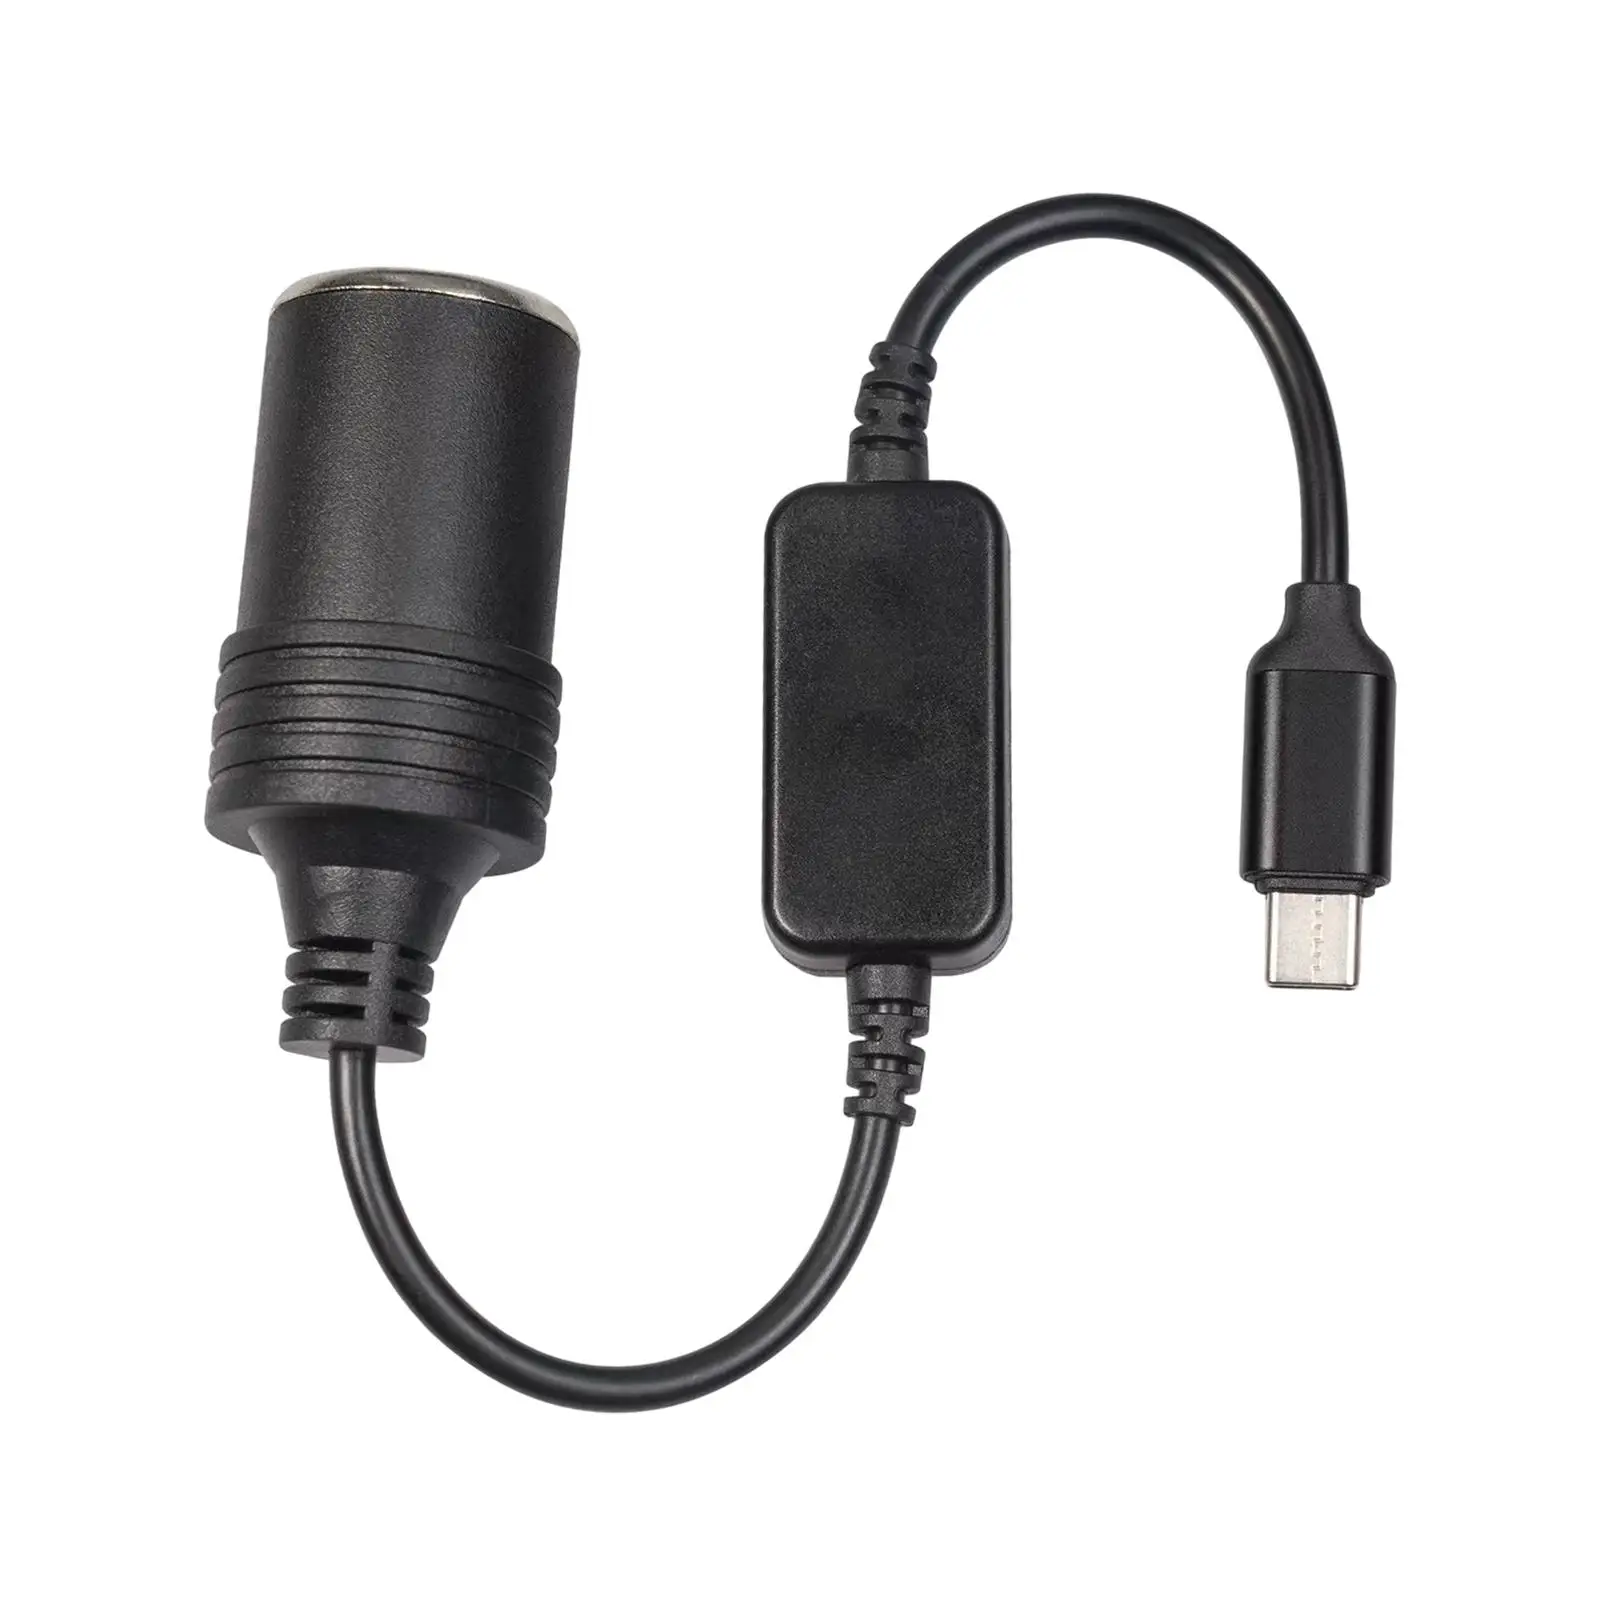 5V USB C Male to 12V Car Cigarette Lighter Female Converter Cable Professional Max Output 12V 1A for Driving Recorder GPS